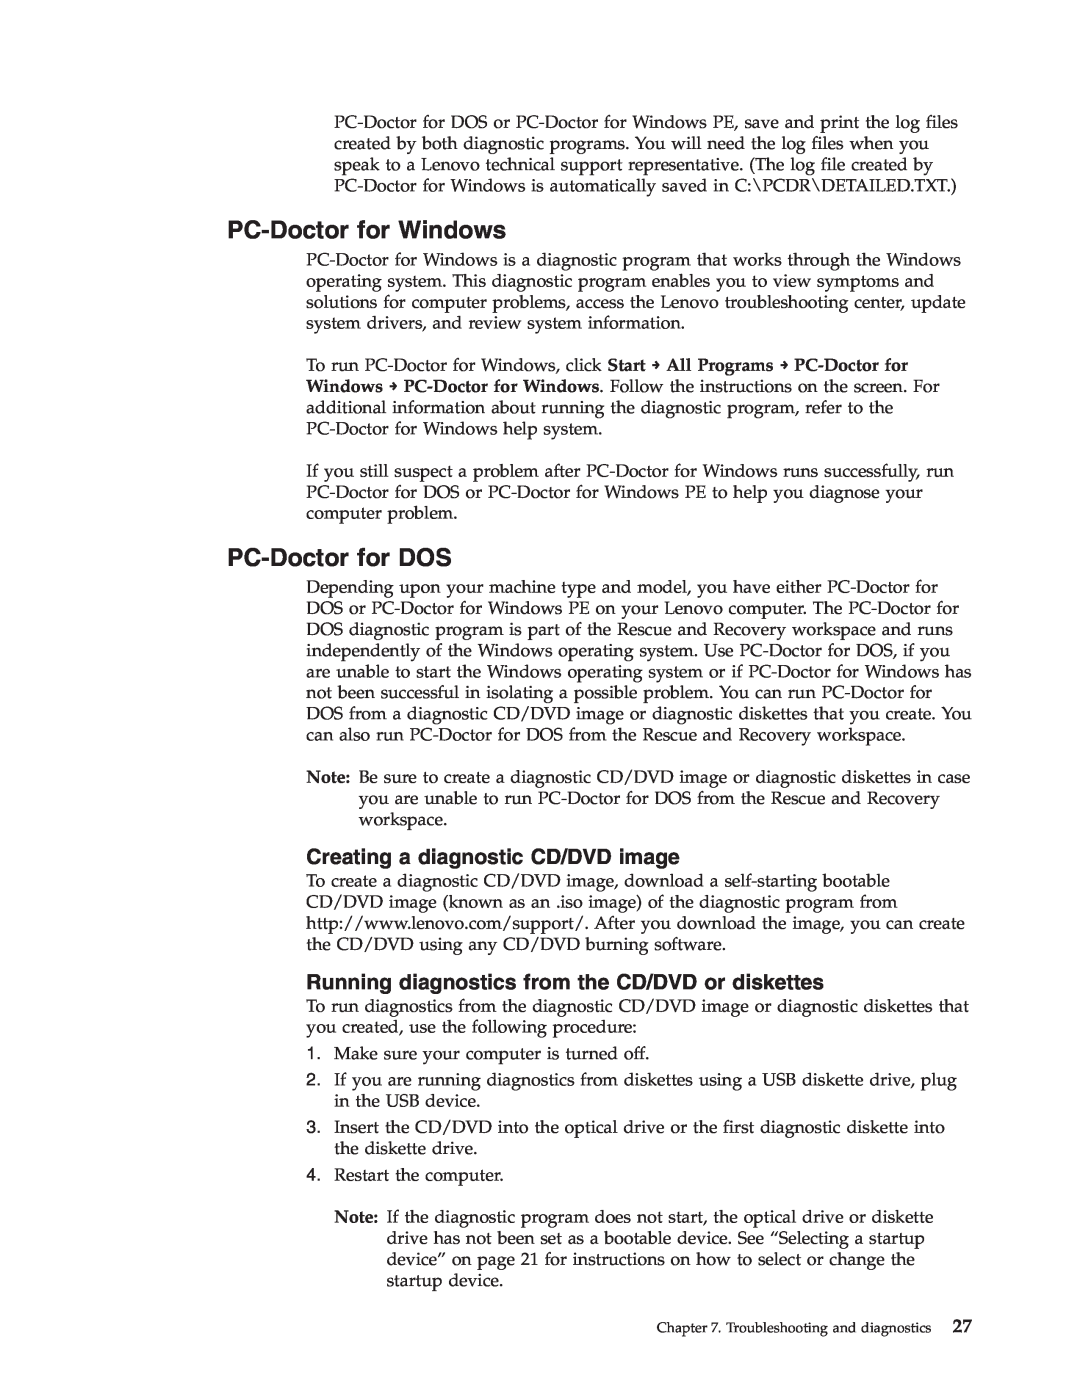 Lenovo 6306 manual PC-Doctorfor Windows, PC-Doctorfor DOS, Creating a diagnostic CD/DVD image 